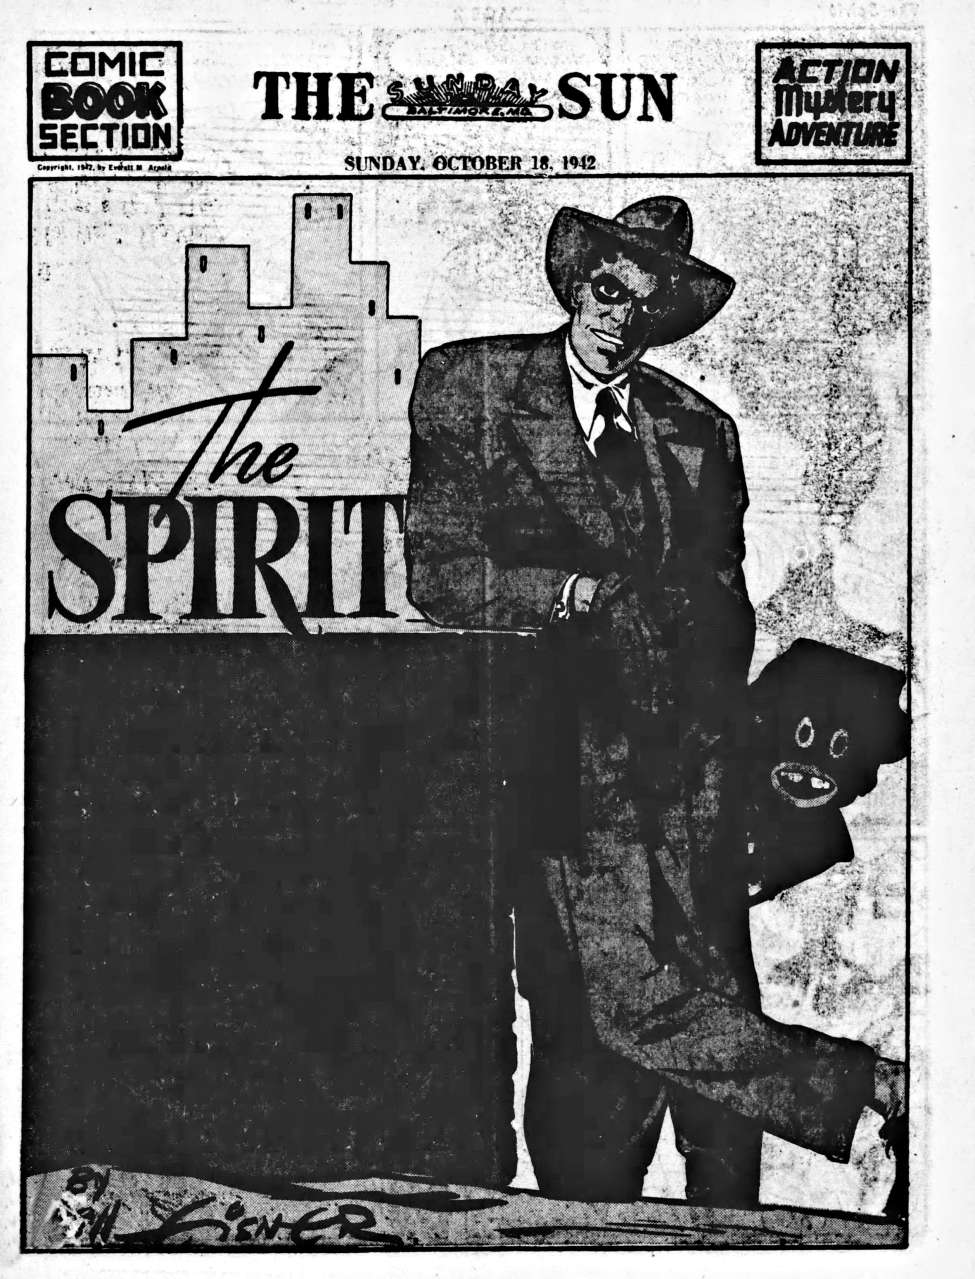 Comic Book Cover For The Spirit (1942-10-18) - Baltimore Sun (b/w)